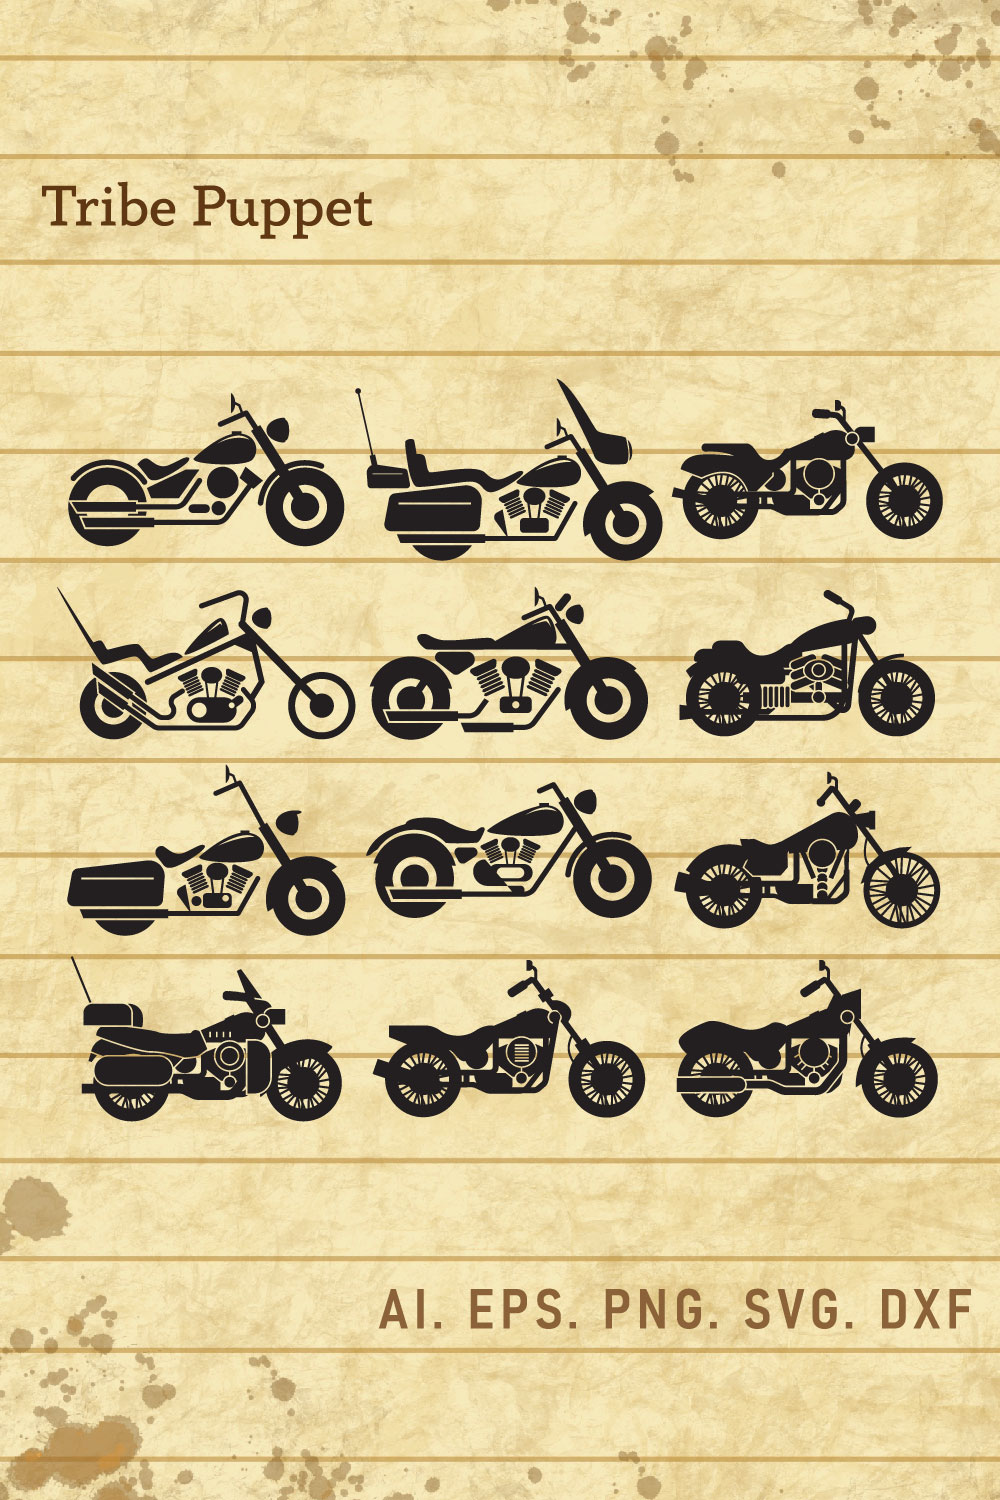 Harley Davidson Bike pinterest preview image.